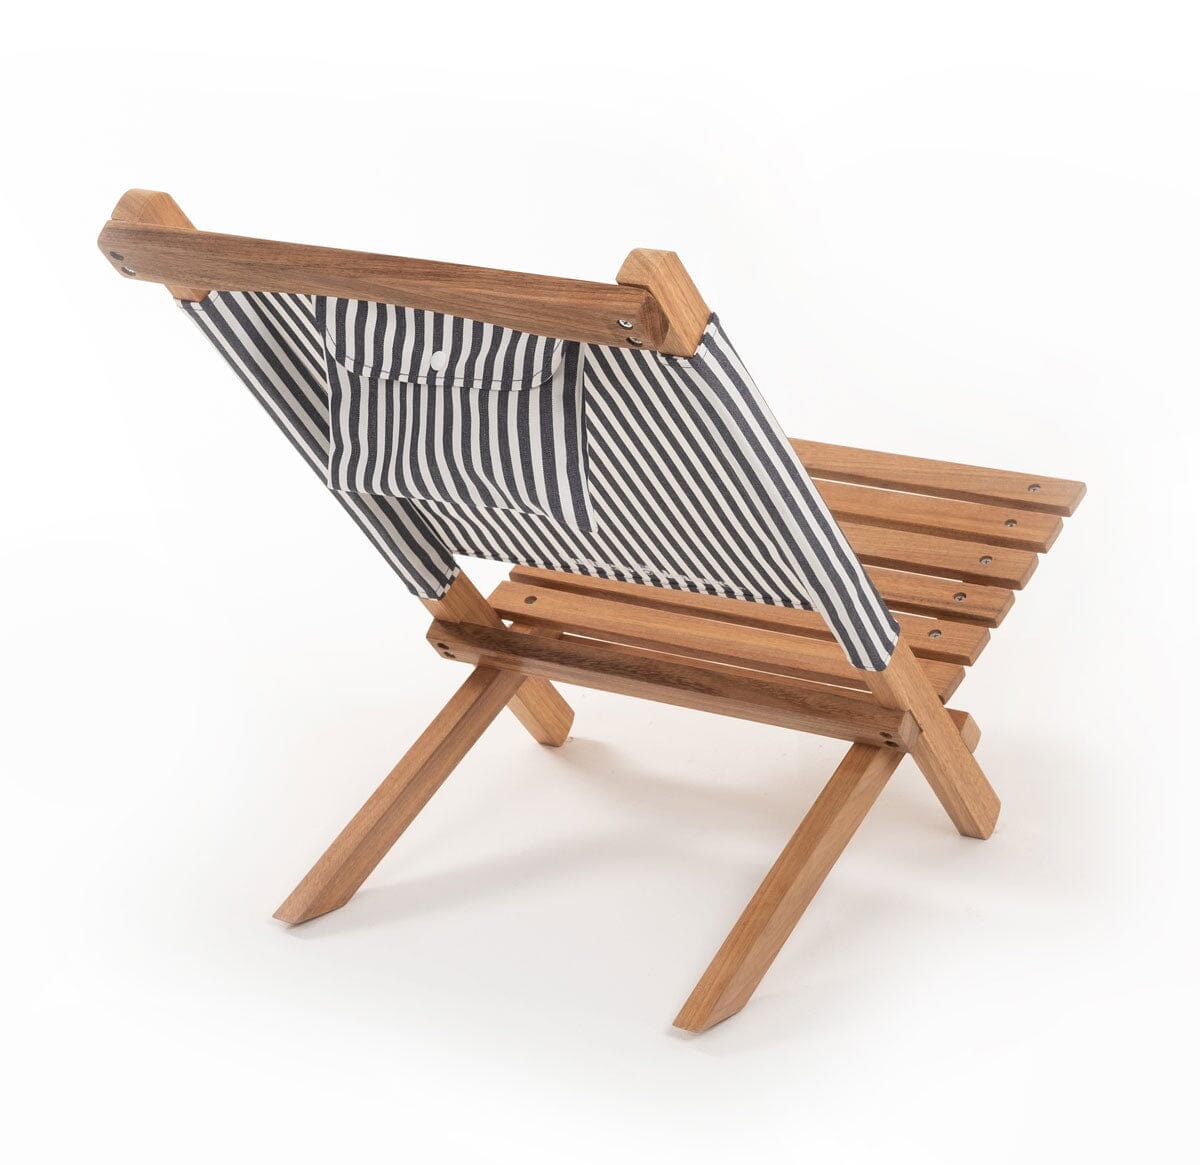 The 2-Piece Chair - Lauren's Navy Stripe